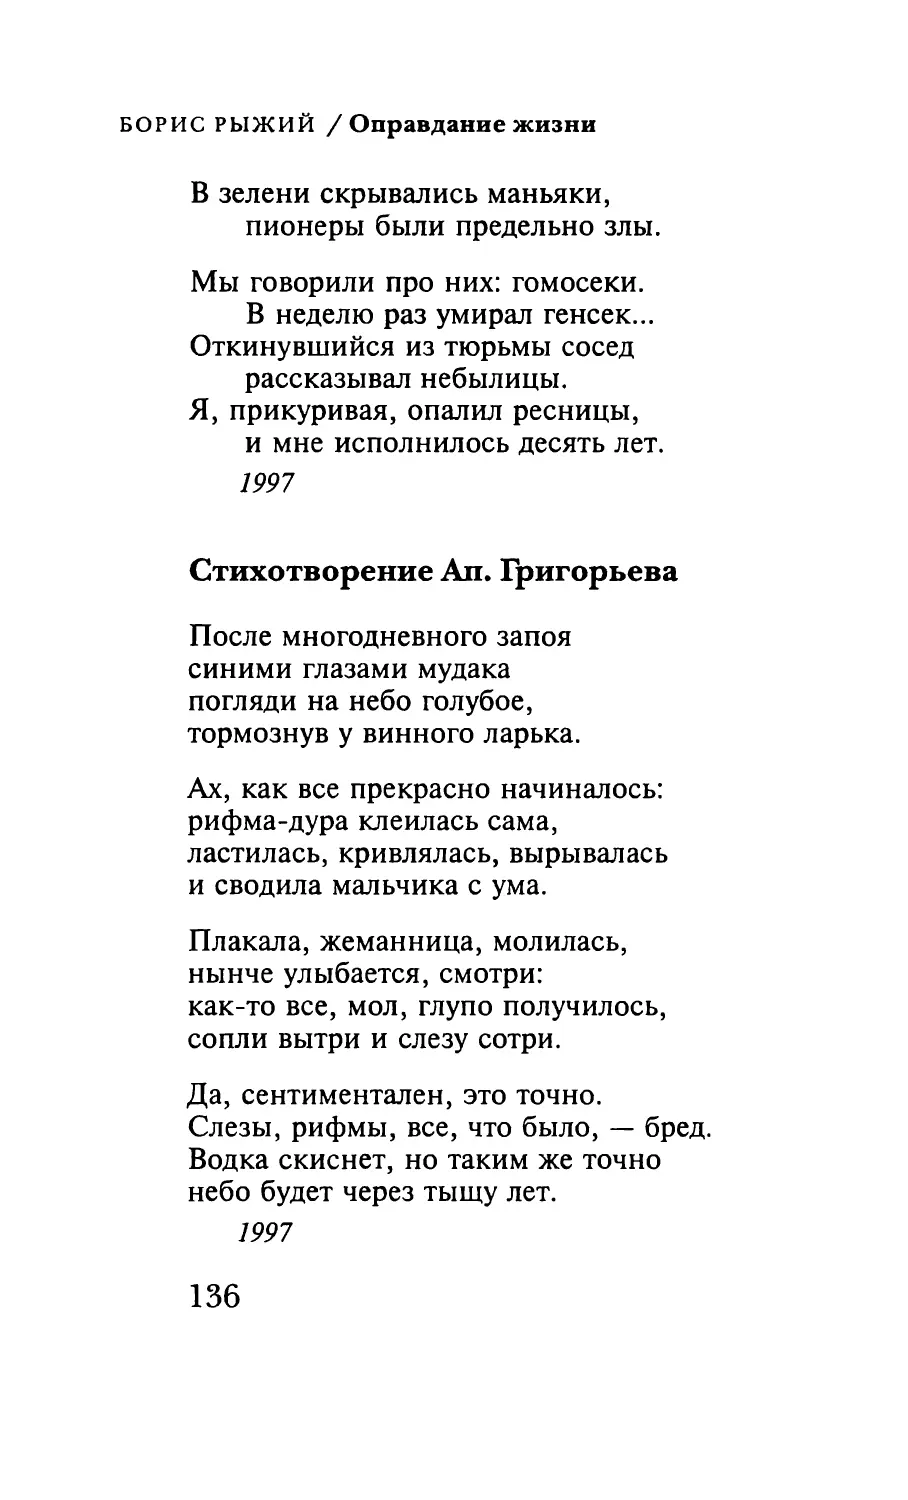 Стихотворение Ап. Григорьева